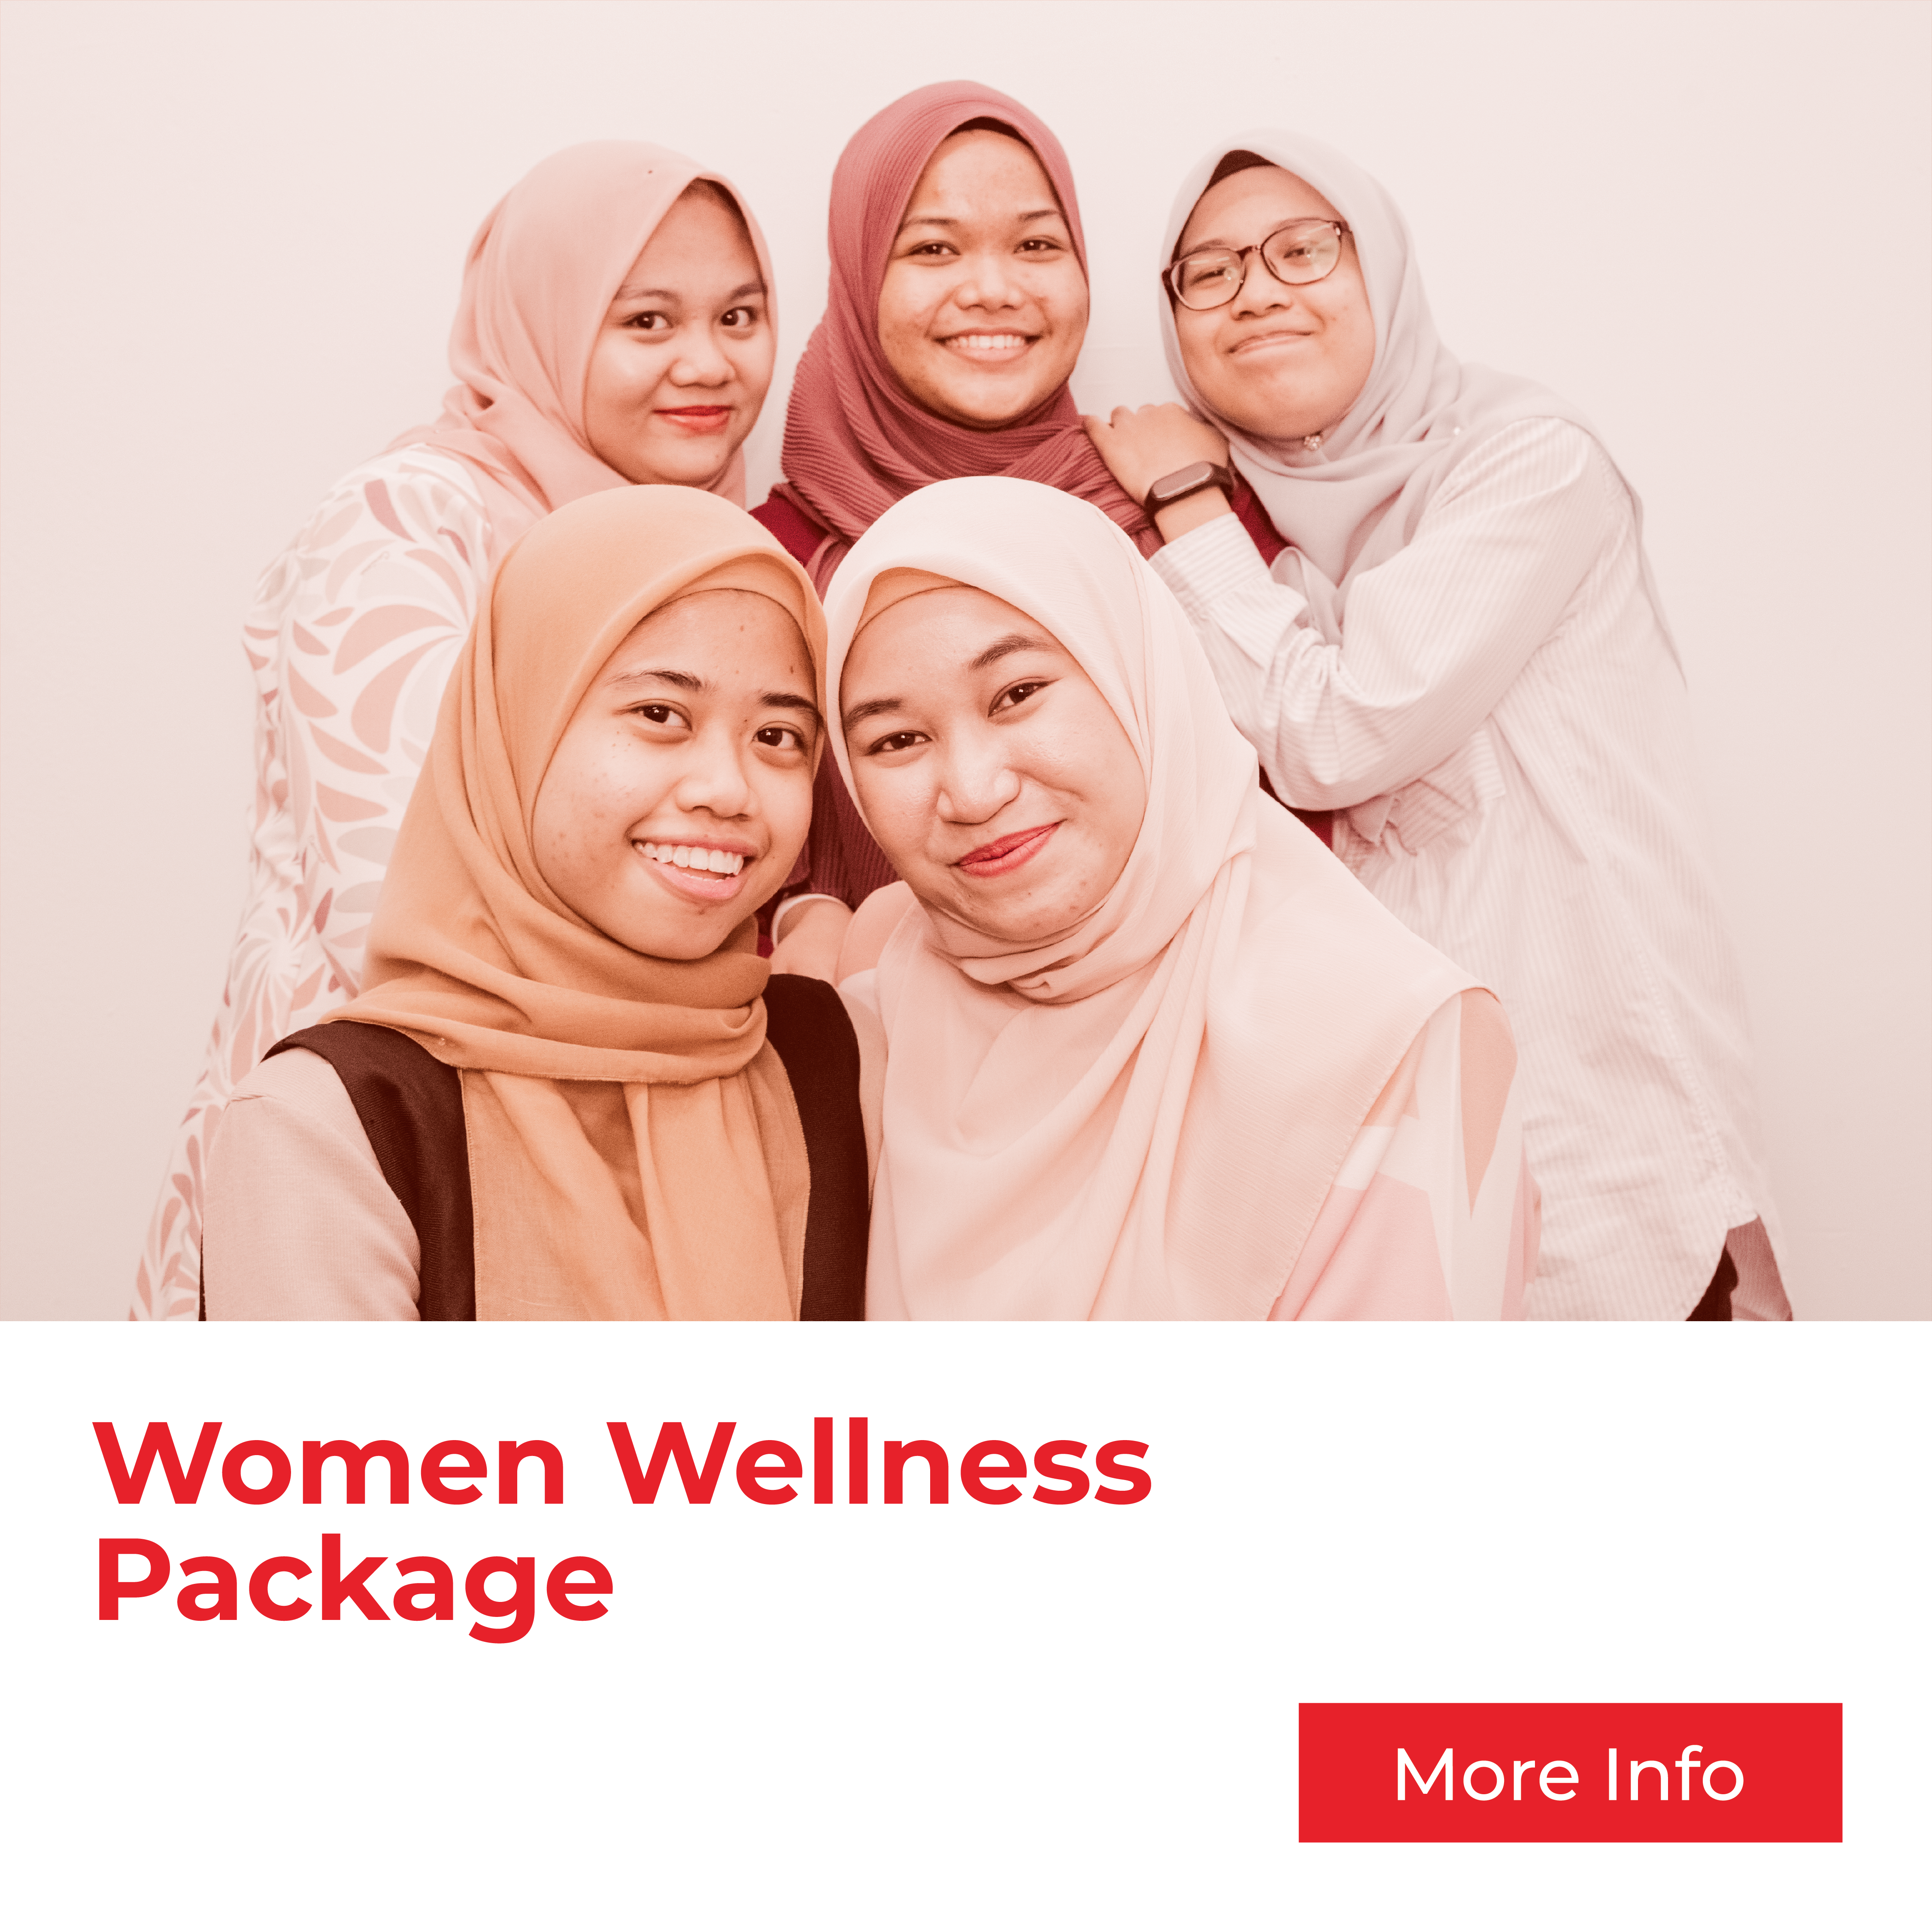 Women Health Screening & Wellness Package from Klinik As Salam